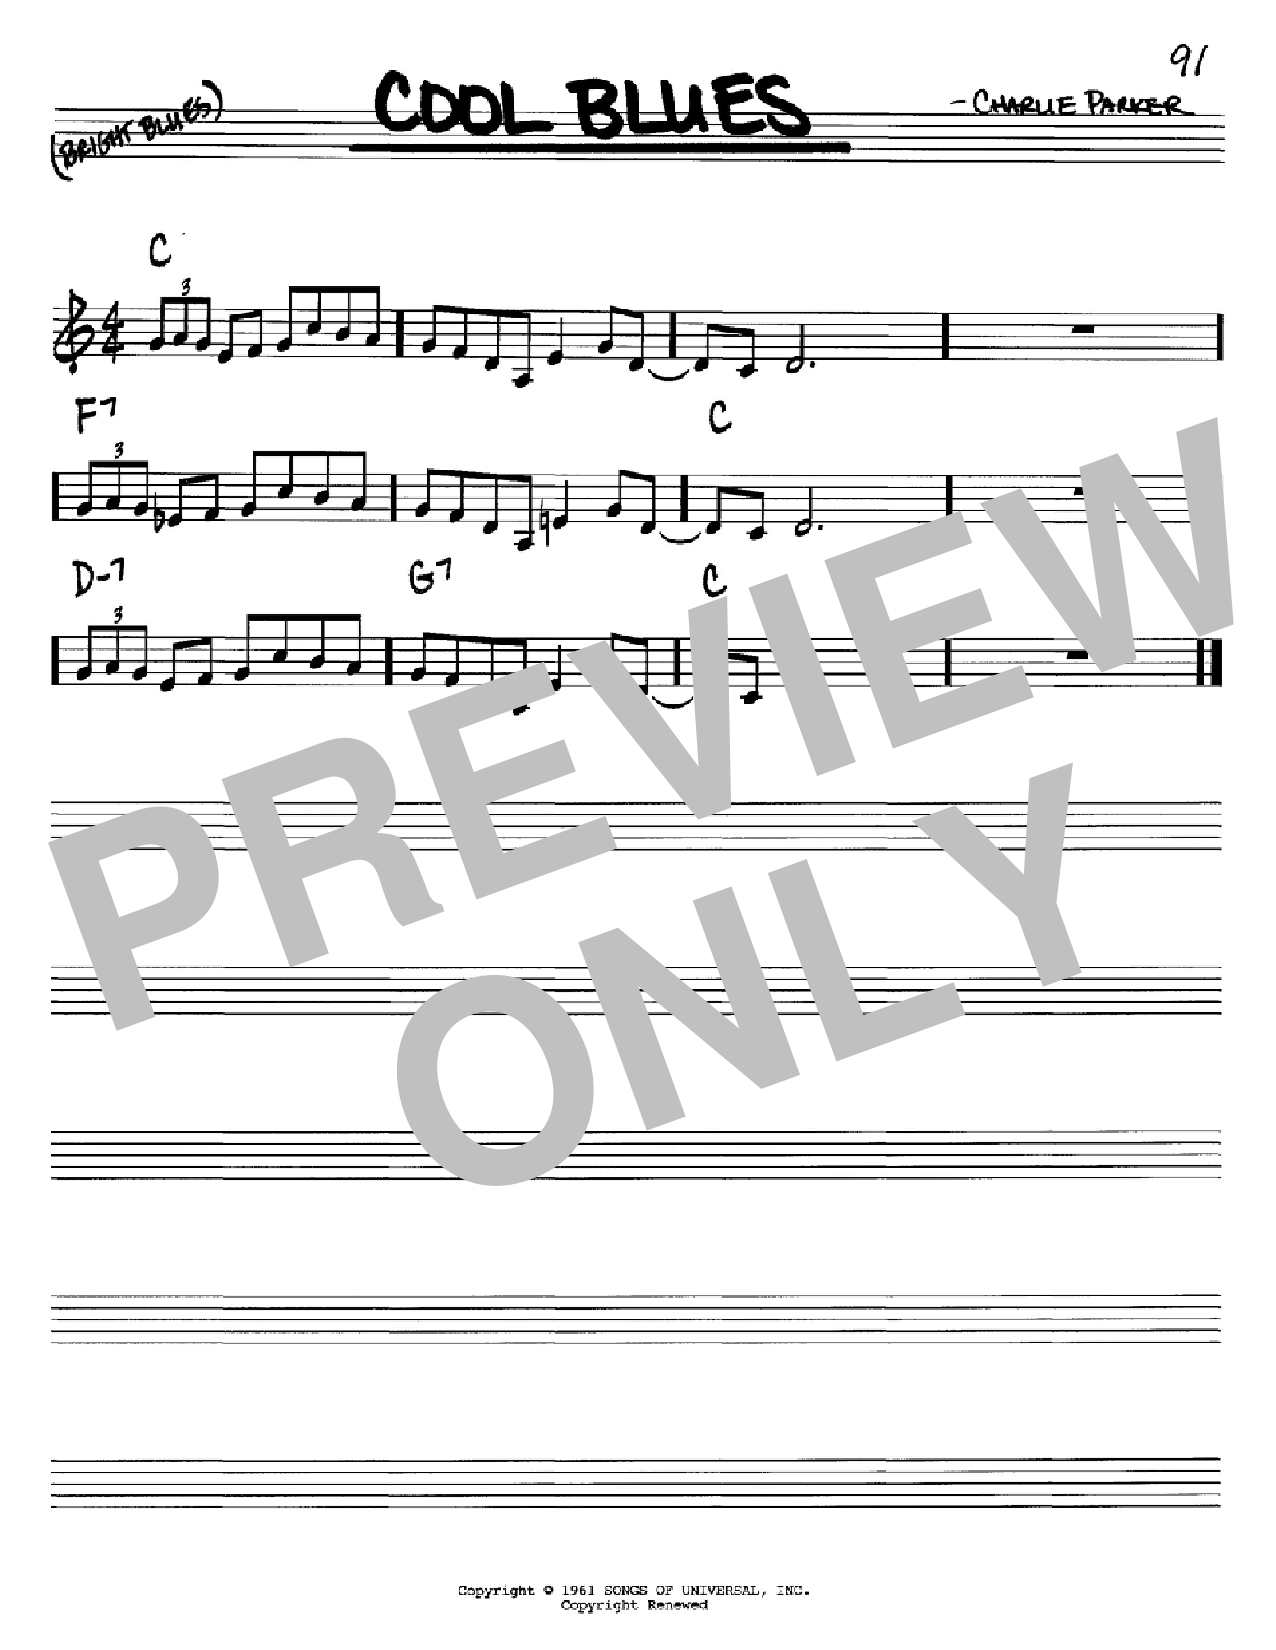 Charlie Parker Cool Blues Sheet Music Notes & Chords for Alto Sax Transcription - Download or Print PDF